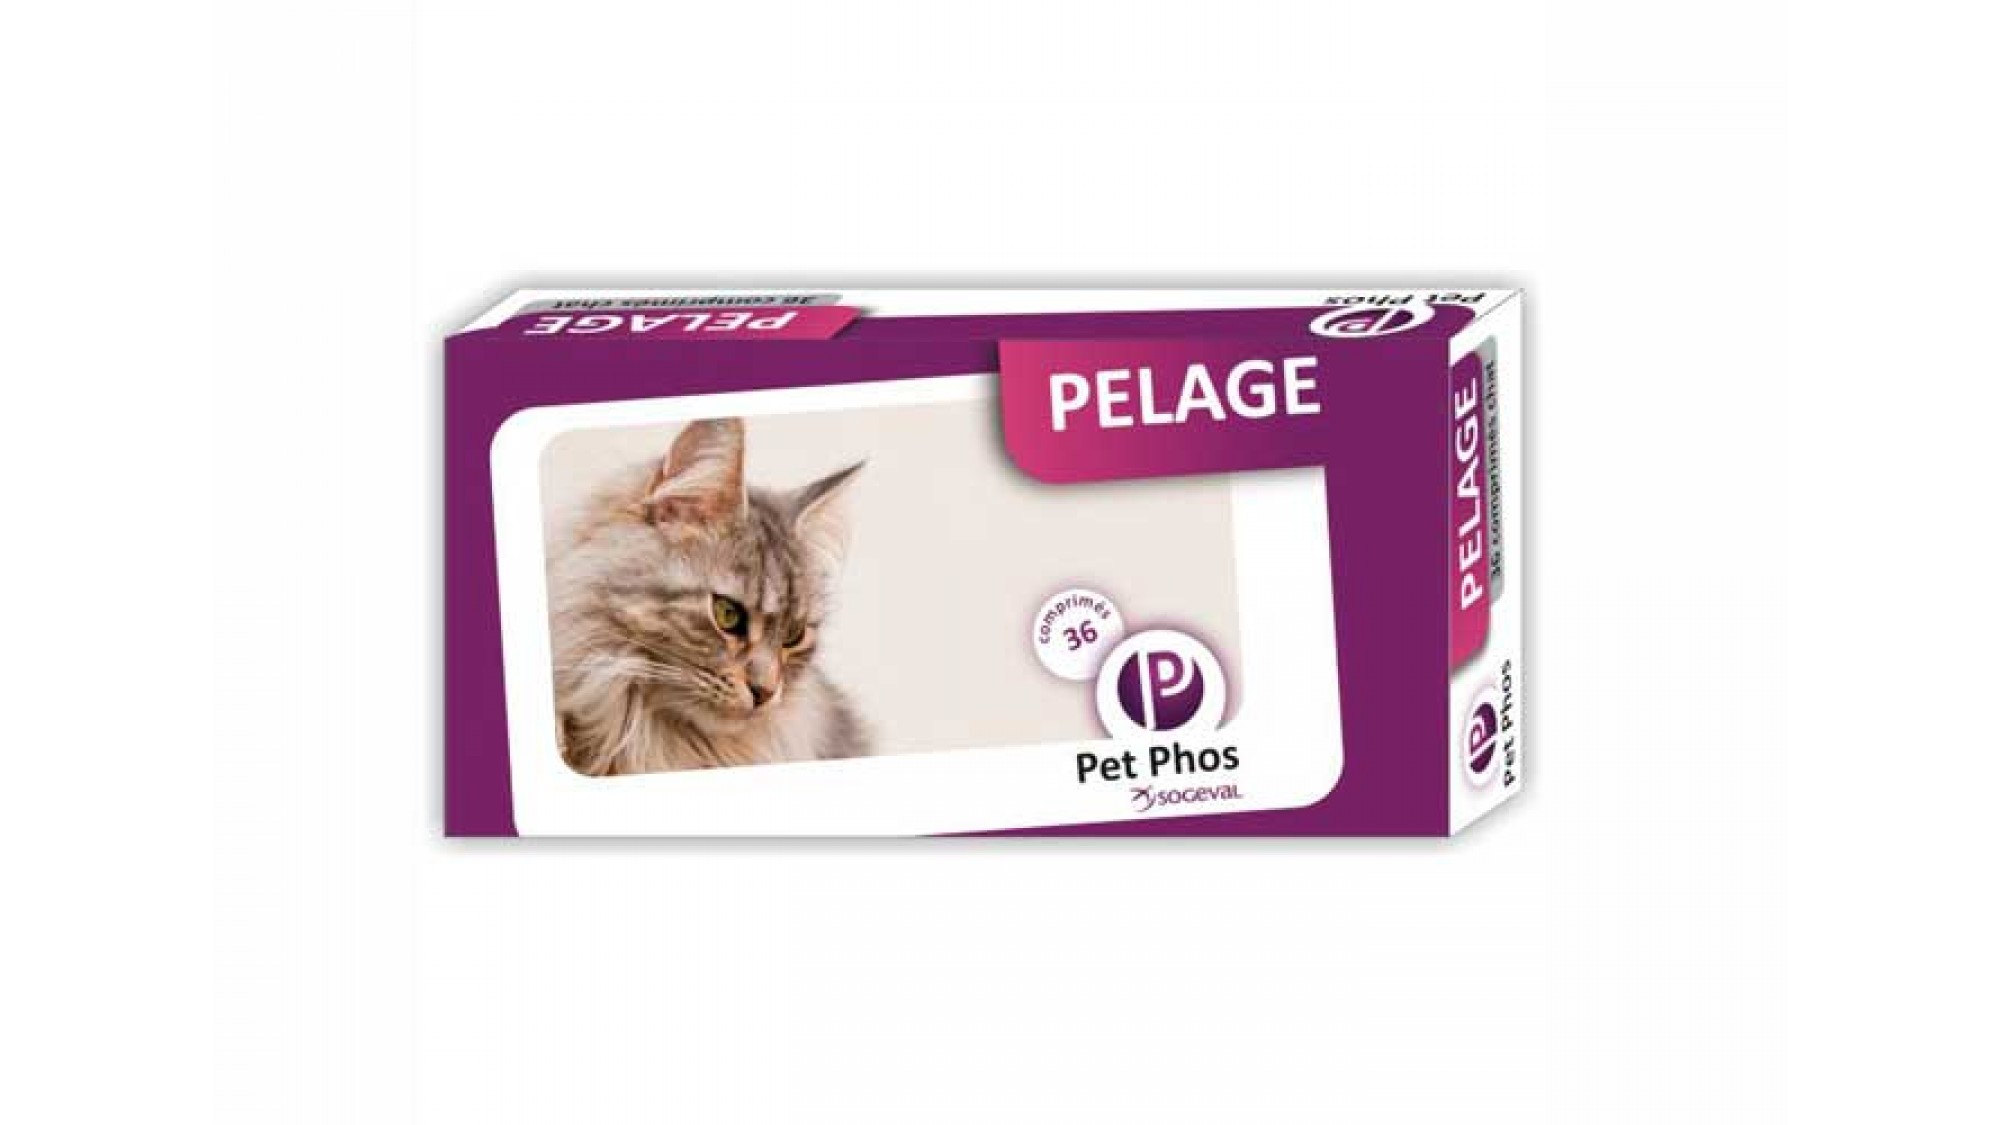 Pet Phos Pelage Piele si Blana 36 Tablete shop4pet.ro